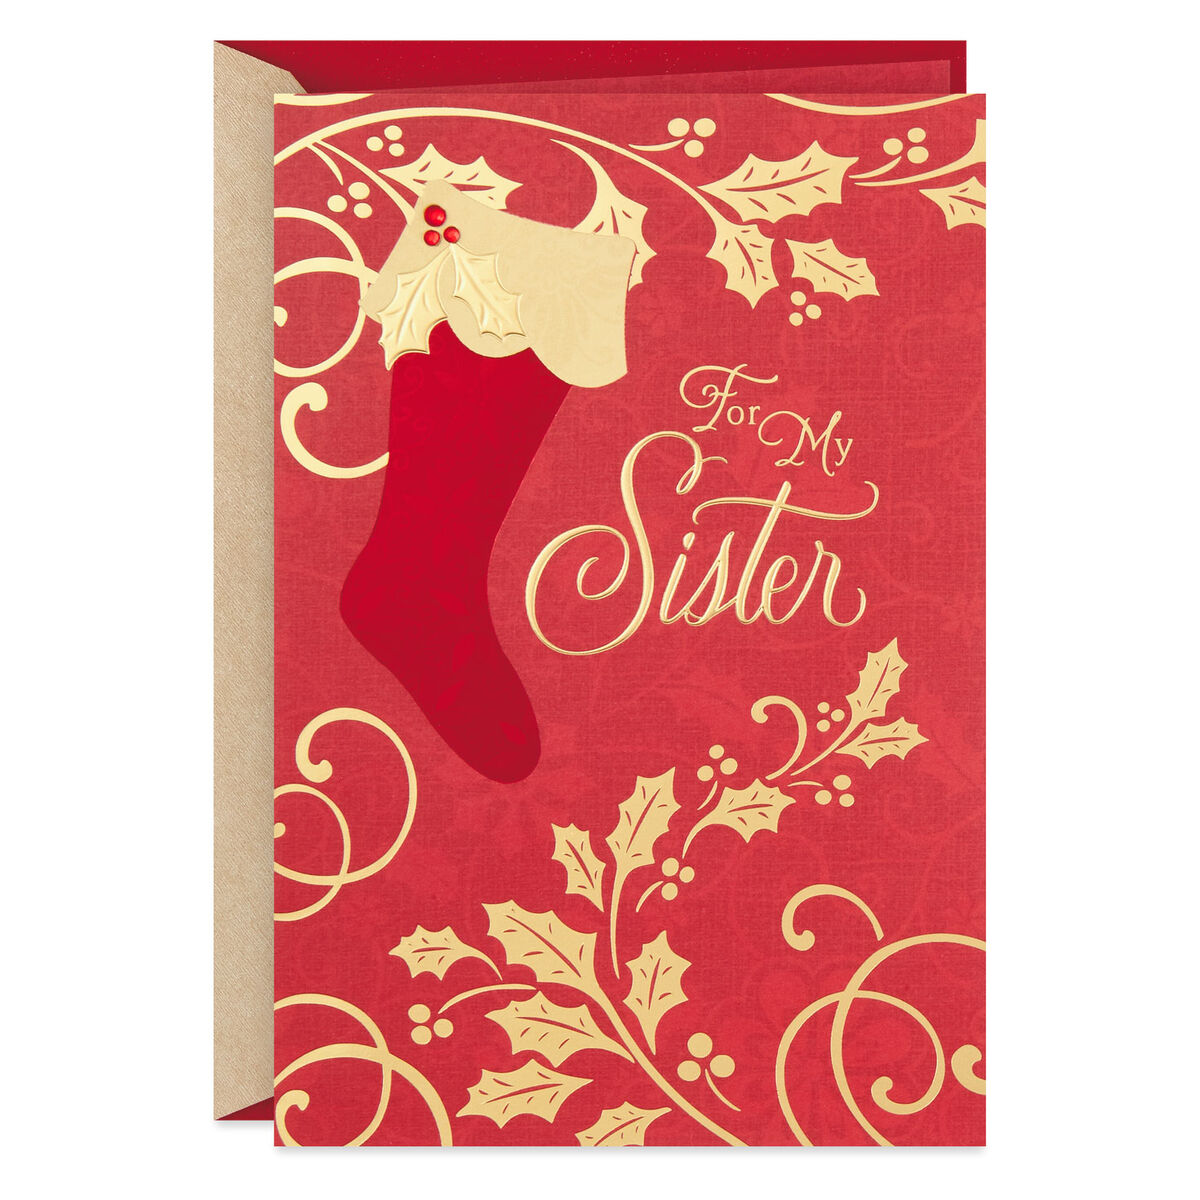 Wishing You Joy And Peace Christmas Card For Sister Greeting Cards Hallmark 